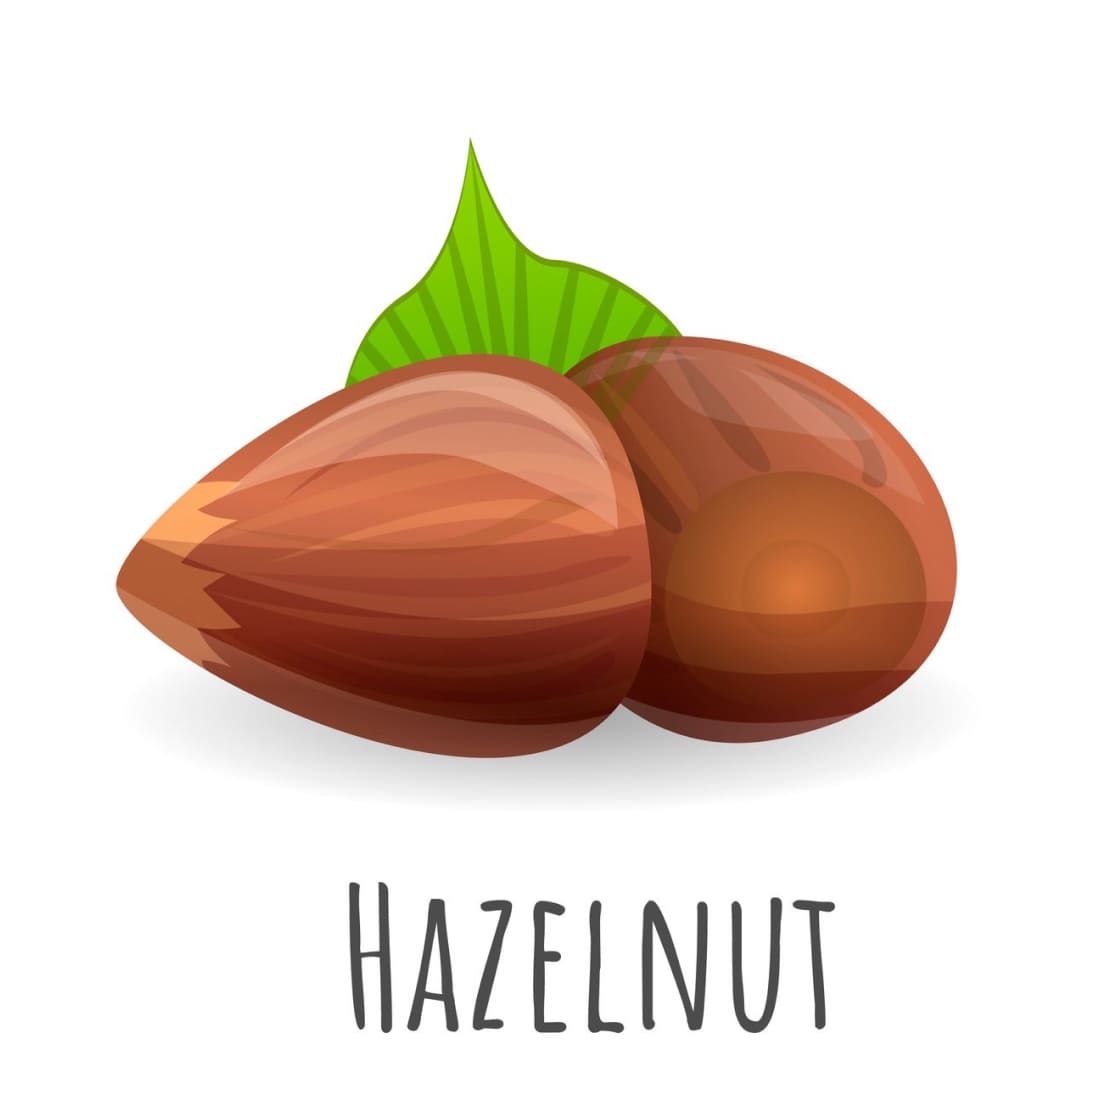 Hazelnut Icon, Cartoon Style.